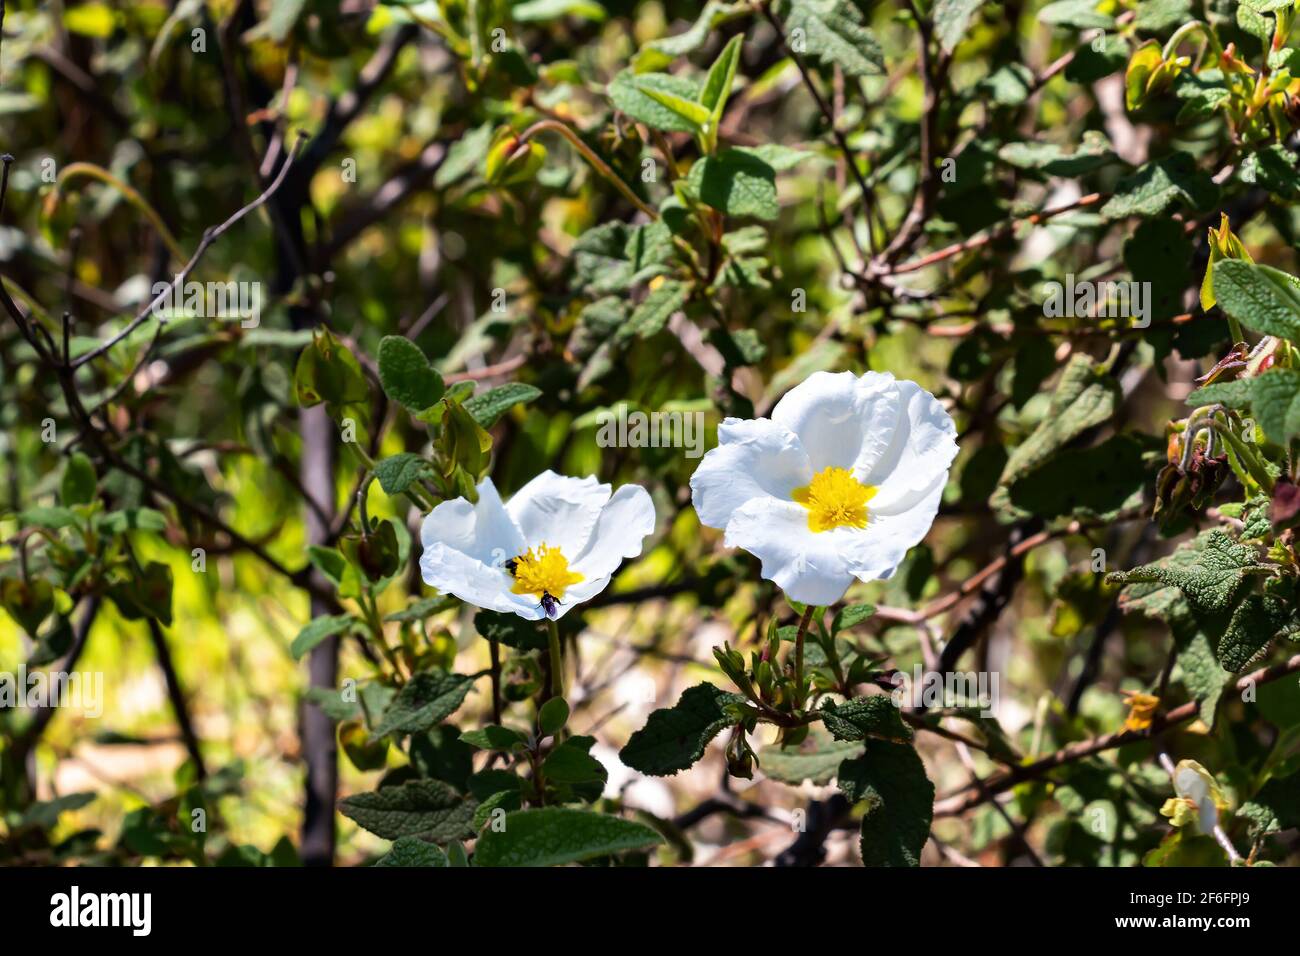 Cistus salviifolius, common names sage-leaved rock-rose, salvia cistus or Gallipoli rose, is a shrub of the family Cistaceae. Stock Photo